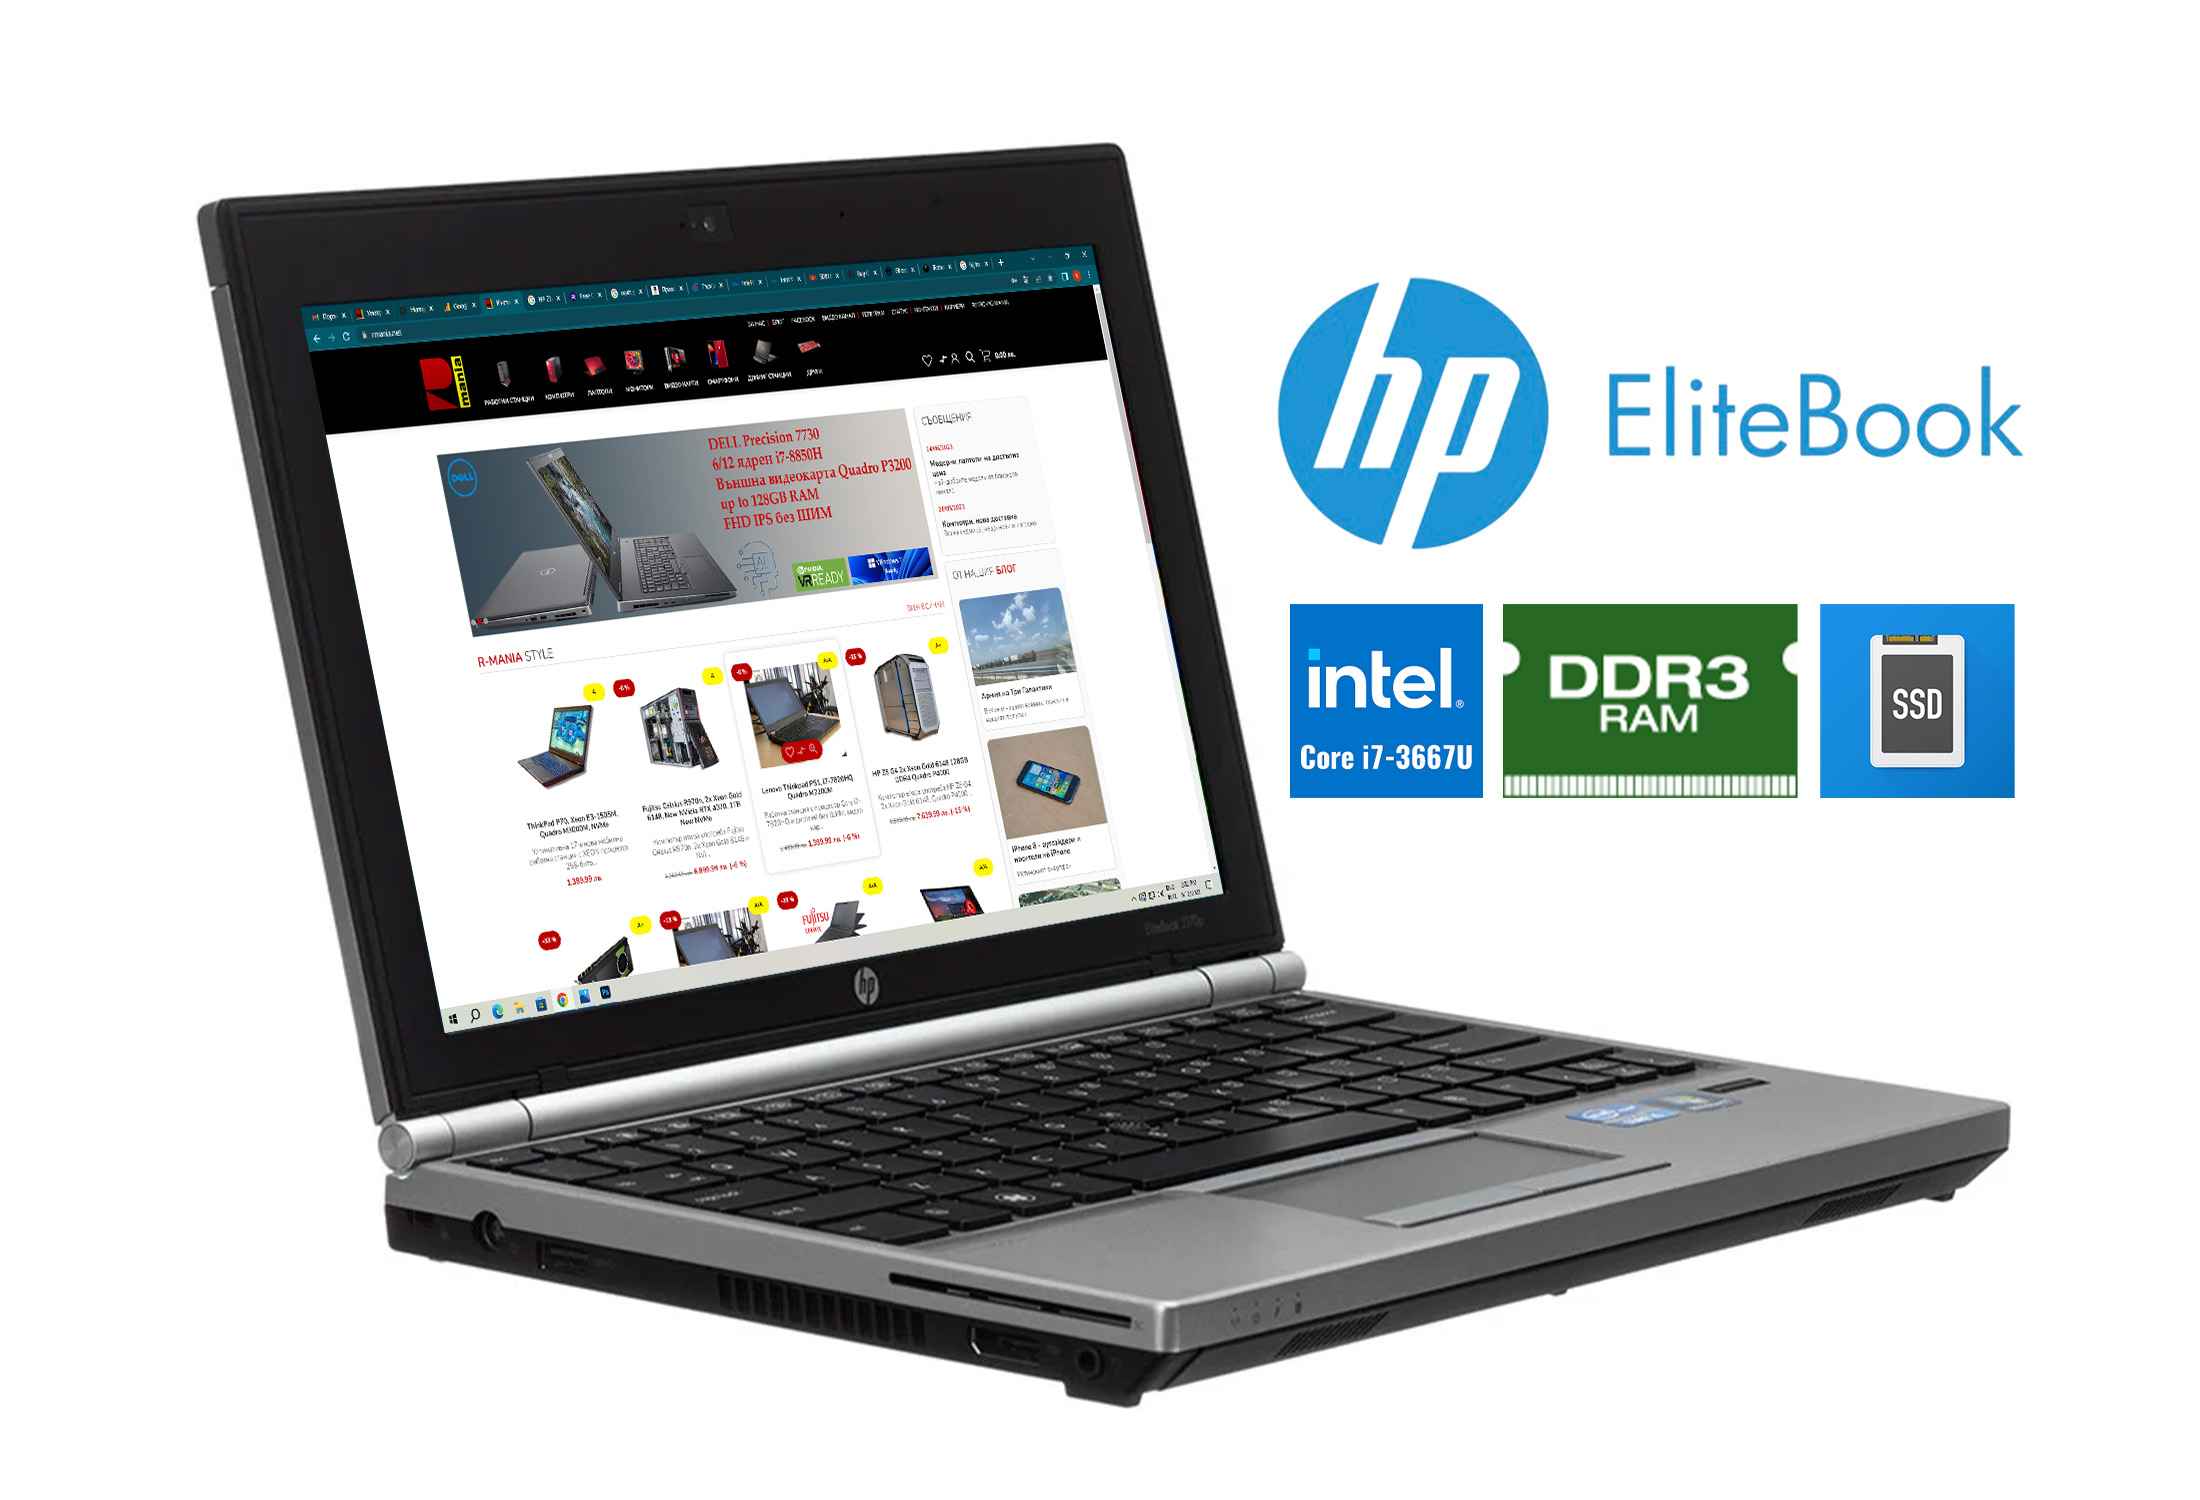 HP EliteBook 2170p  i7-3667U  8GB DDR3  256GB SSD  Camera